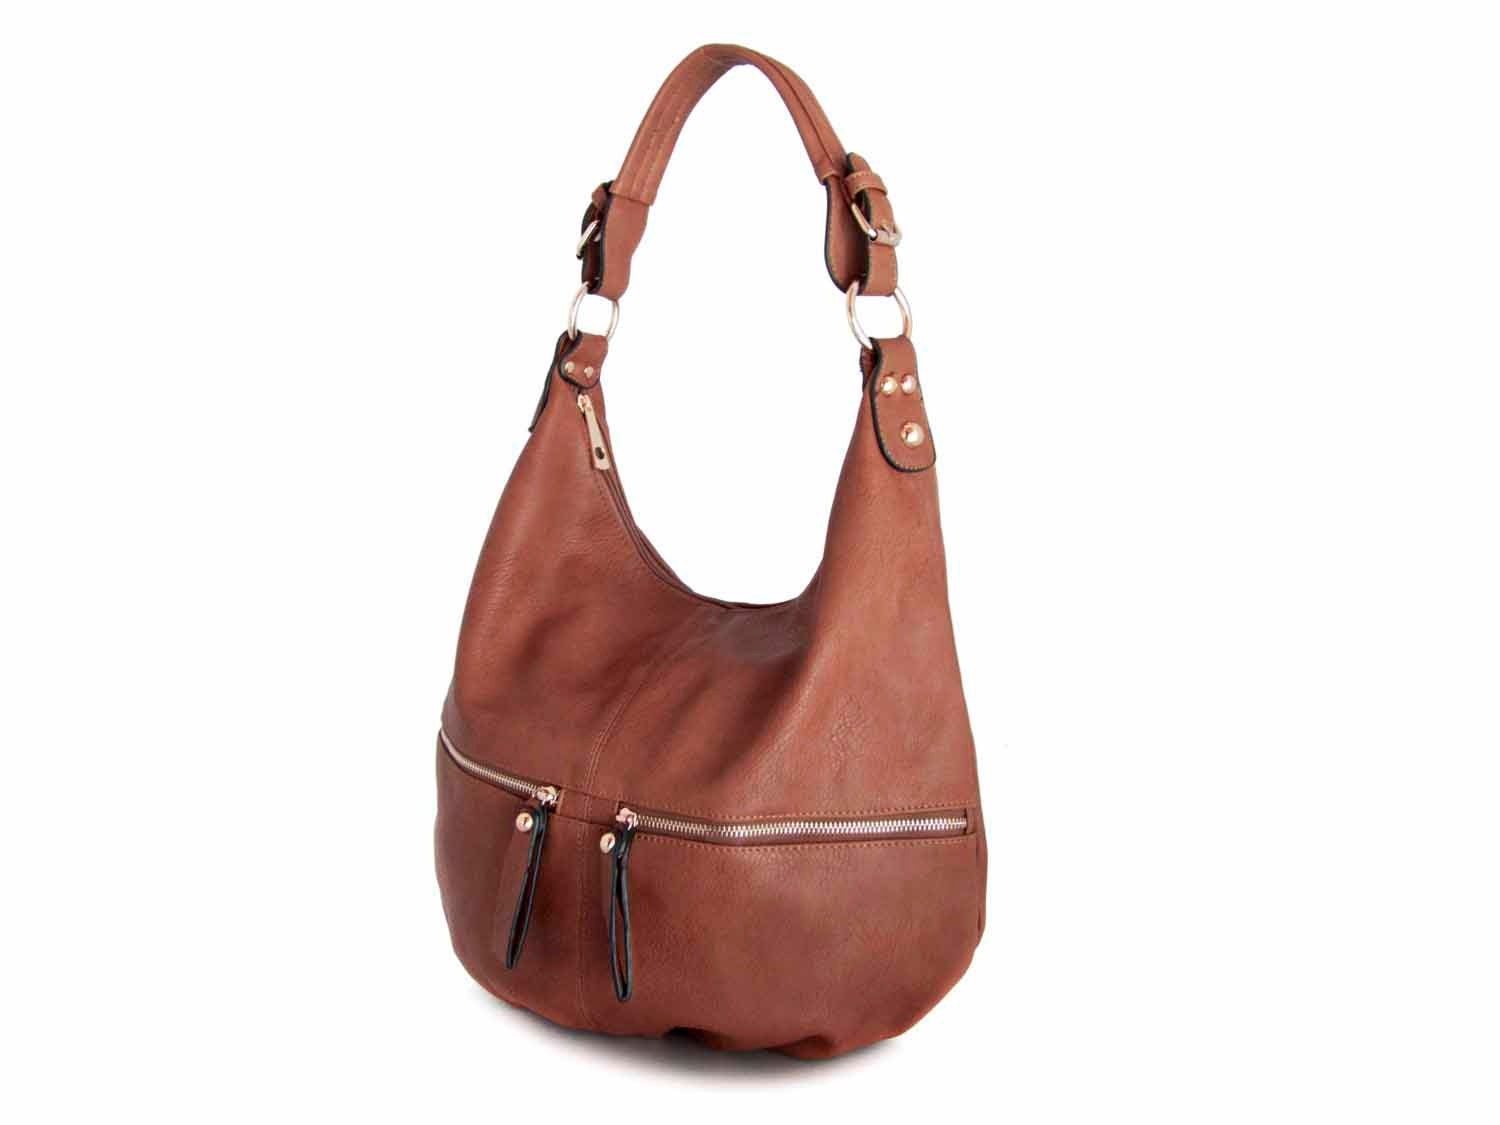 Leather Tote Hobo Bag Handbag in Vegan by VeganLeatherHandbags